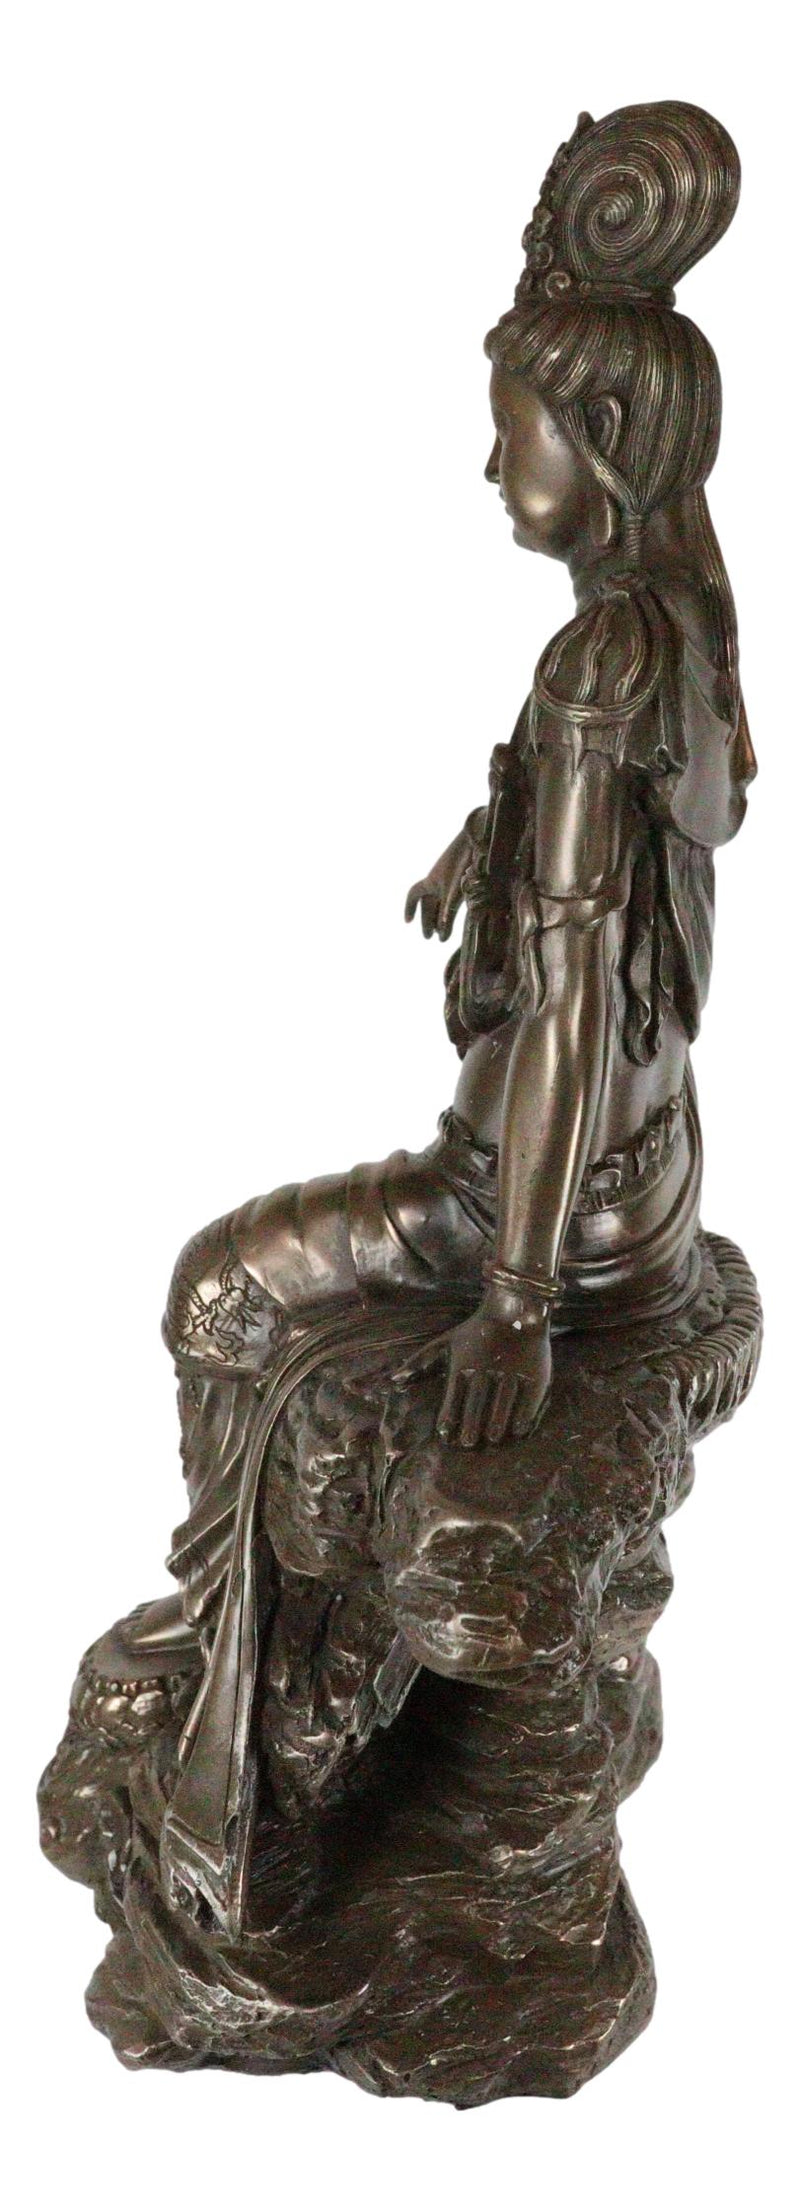 Ebros Water And Moon Goddess Kuan Yin Bodhisattva Sitting Figurine 13.75"H